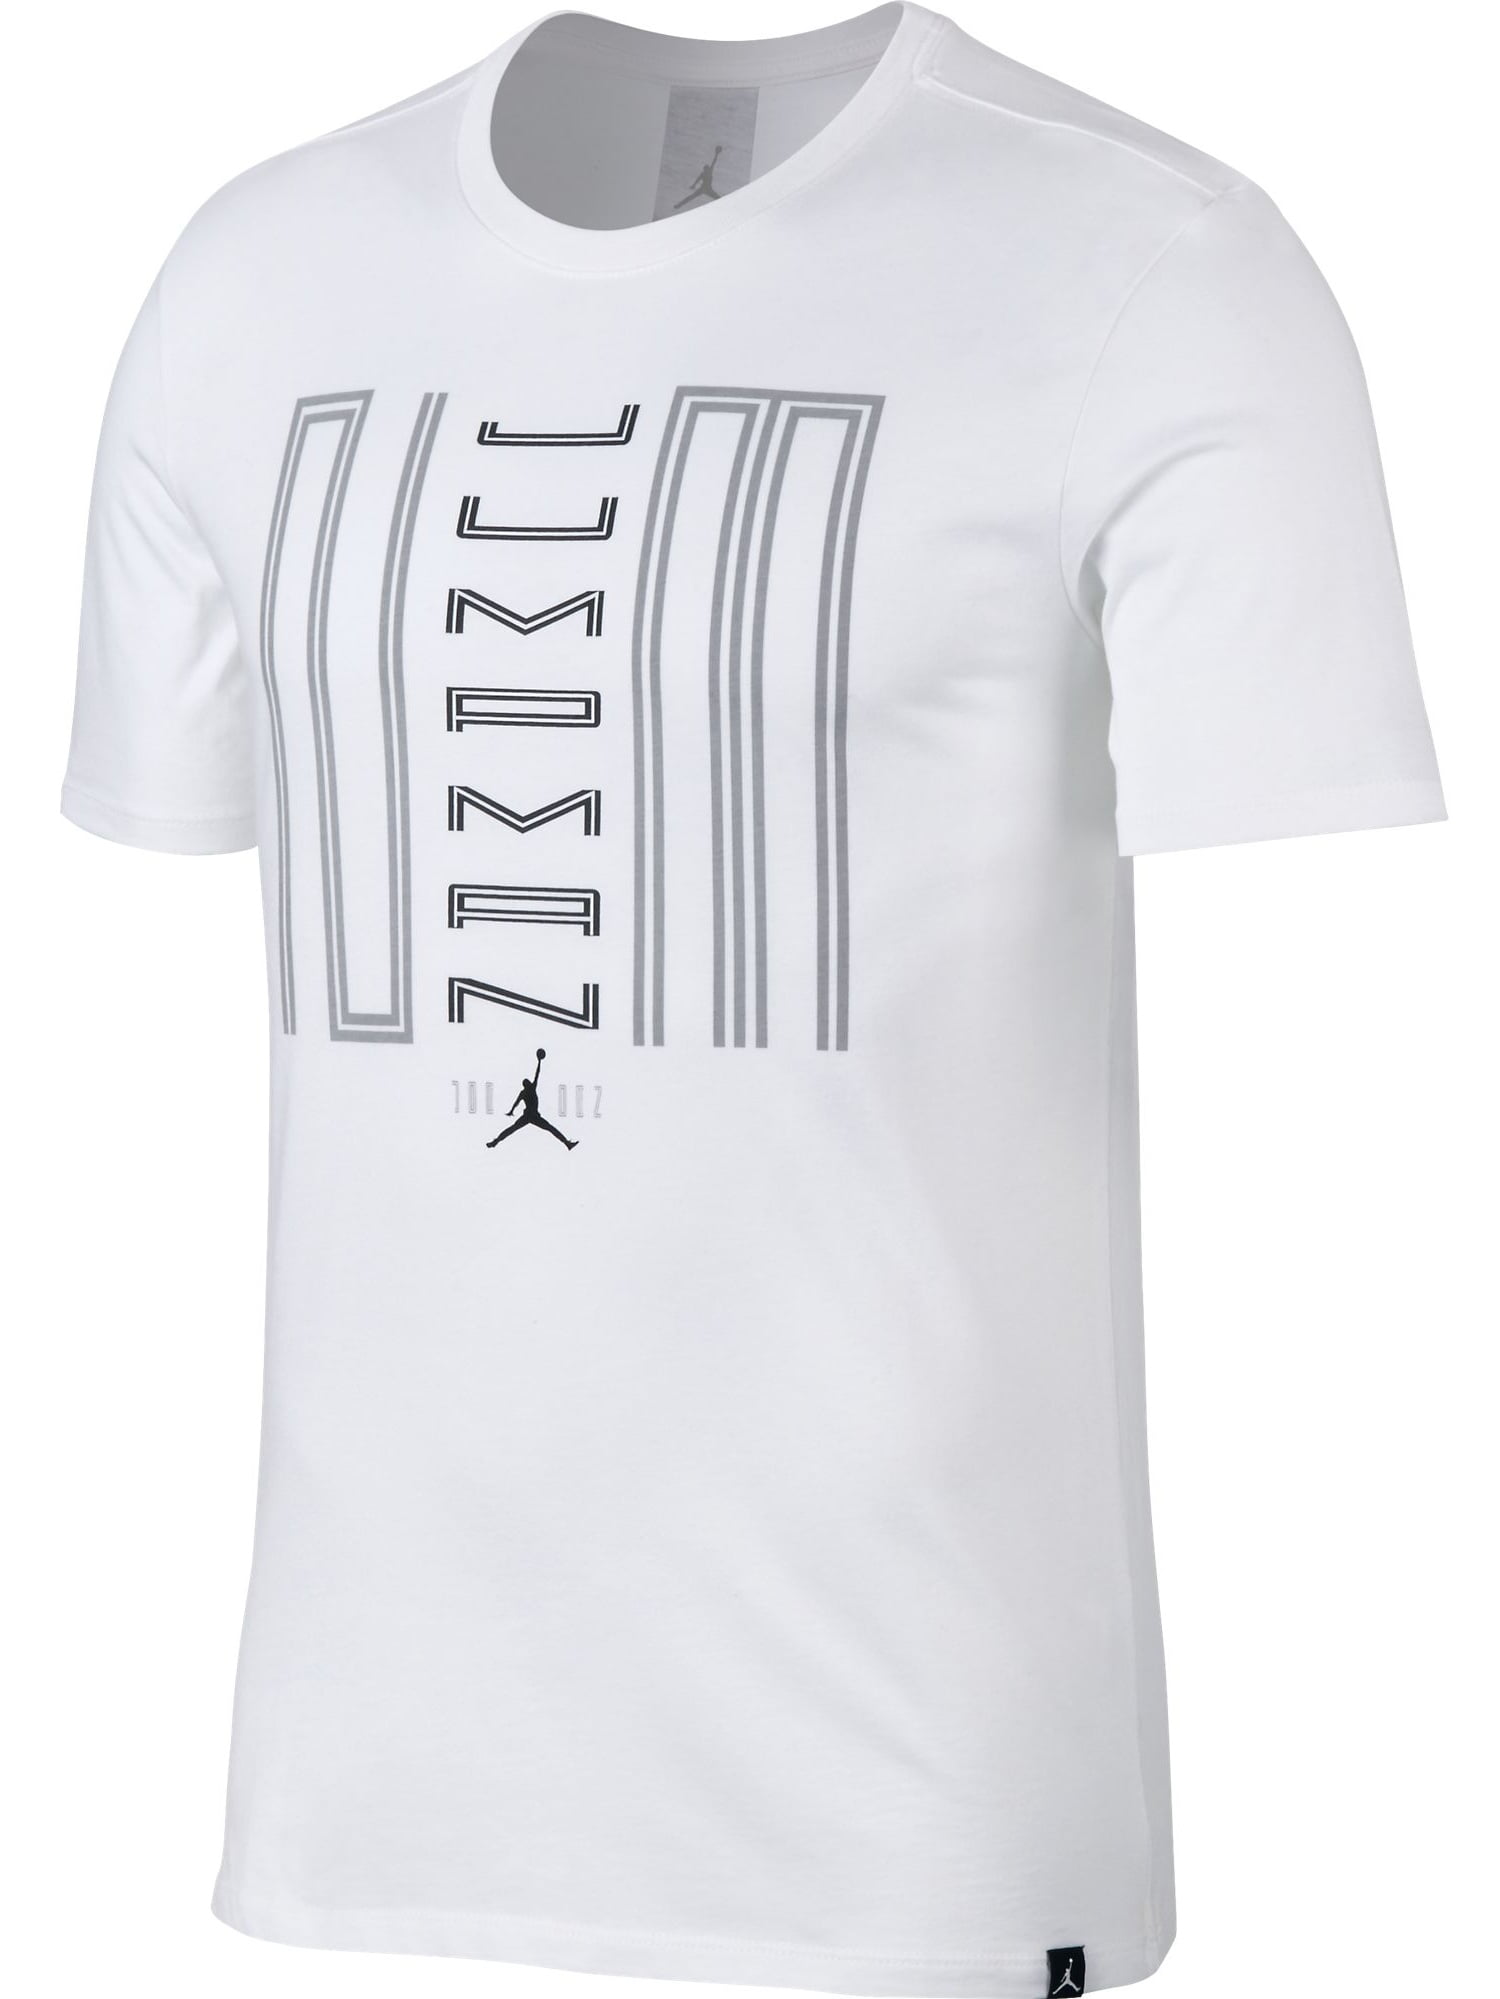 Jordan 11 Jumpman 23 Men's Sportswear Casual T-Shirt White/Black 844282 ...